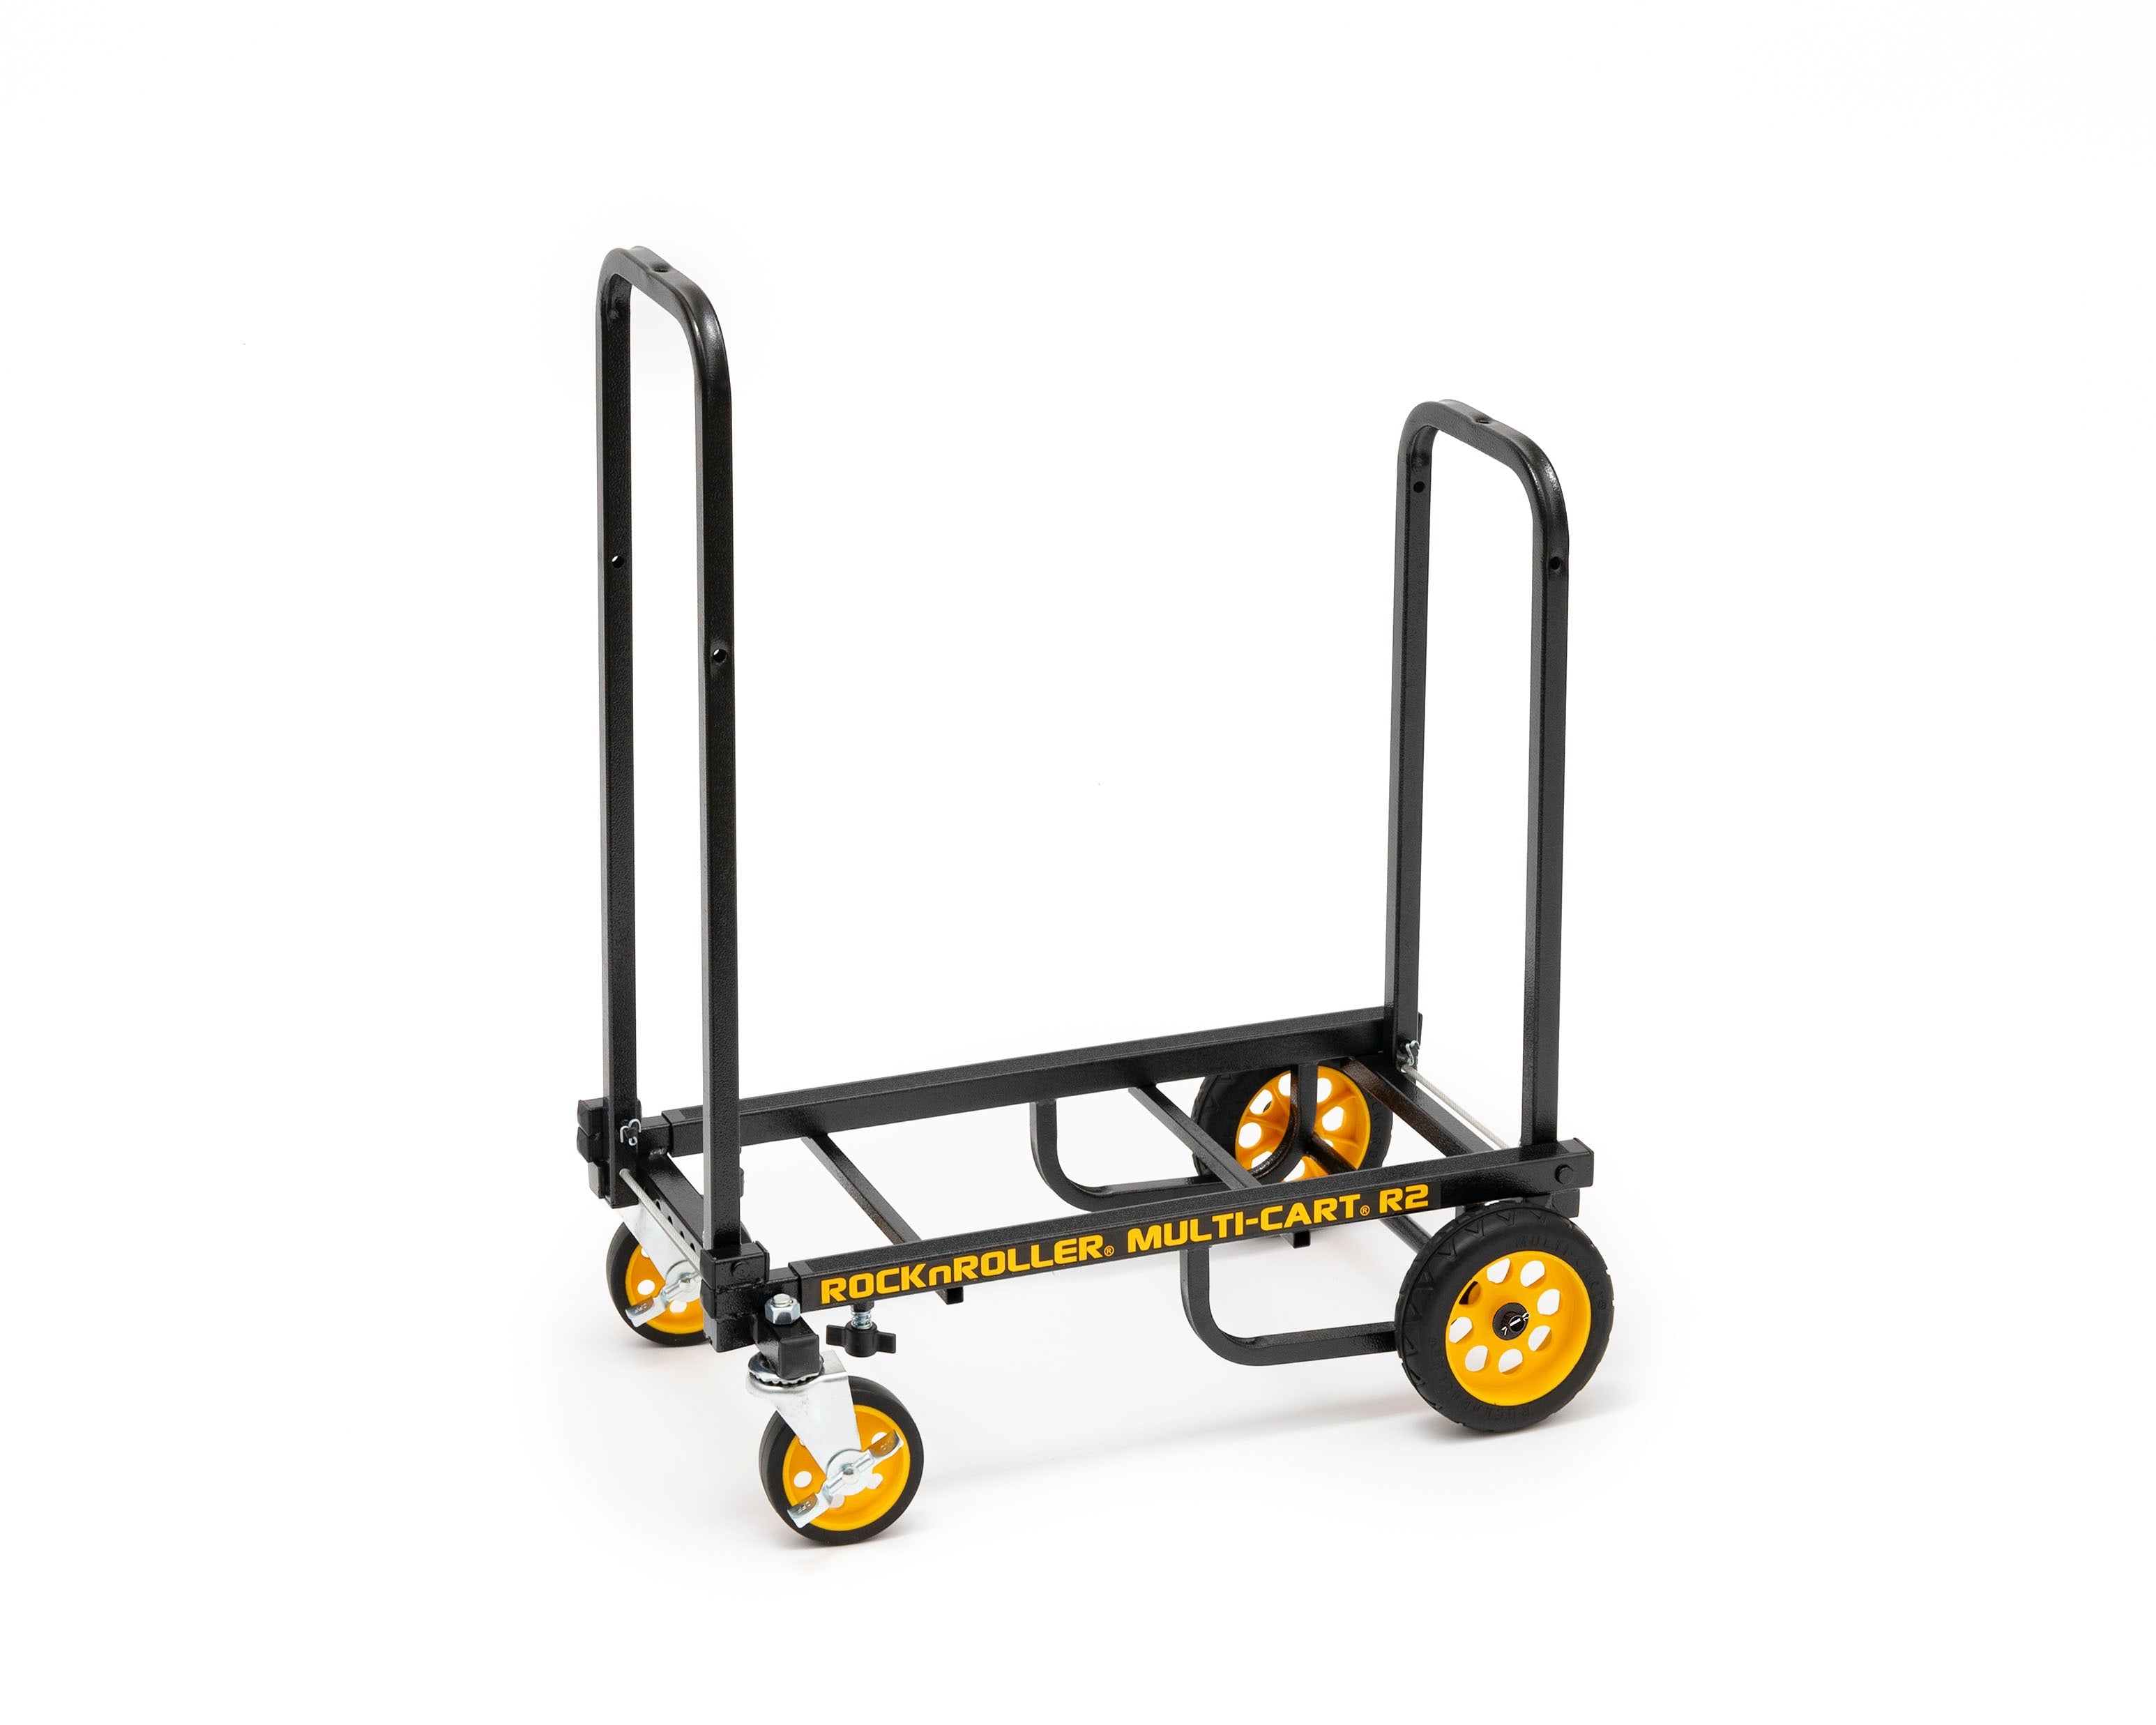 RocknRoller® Multi-Cart® R2RT-BL "Micro"